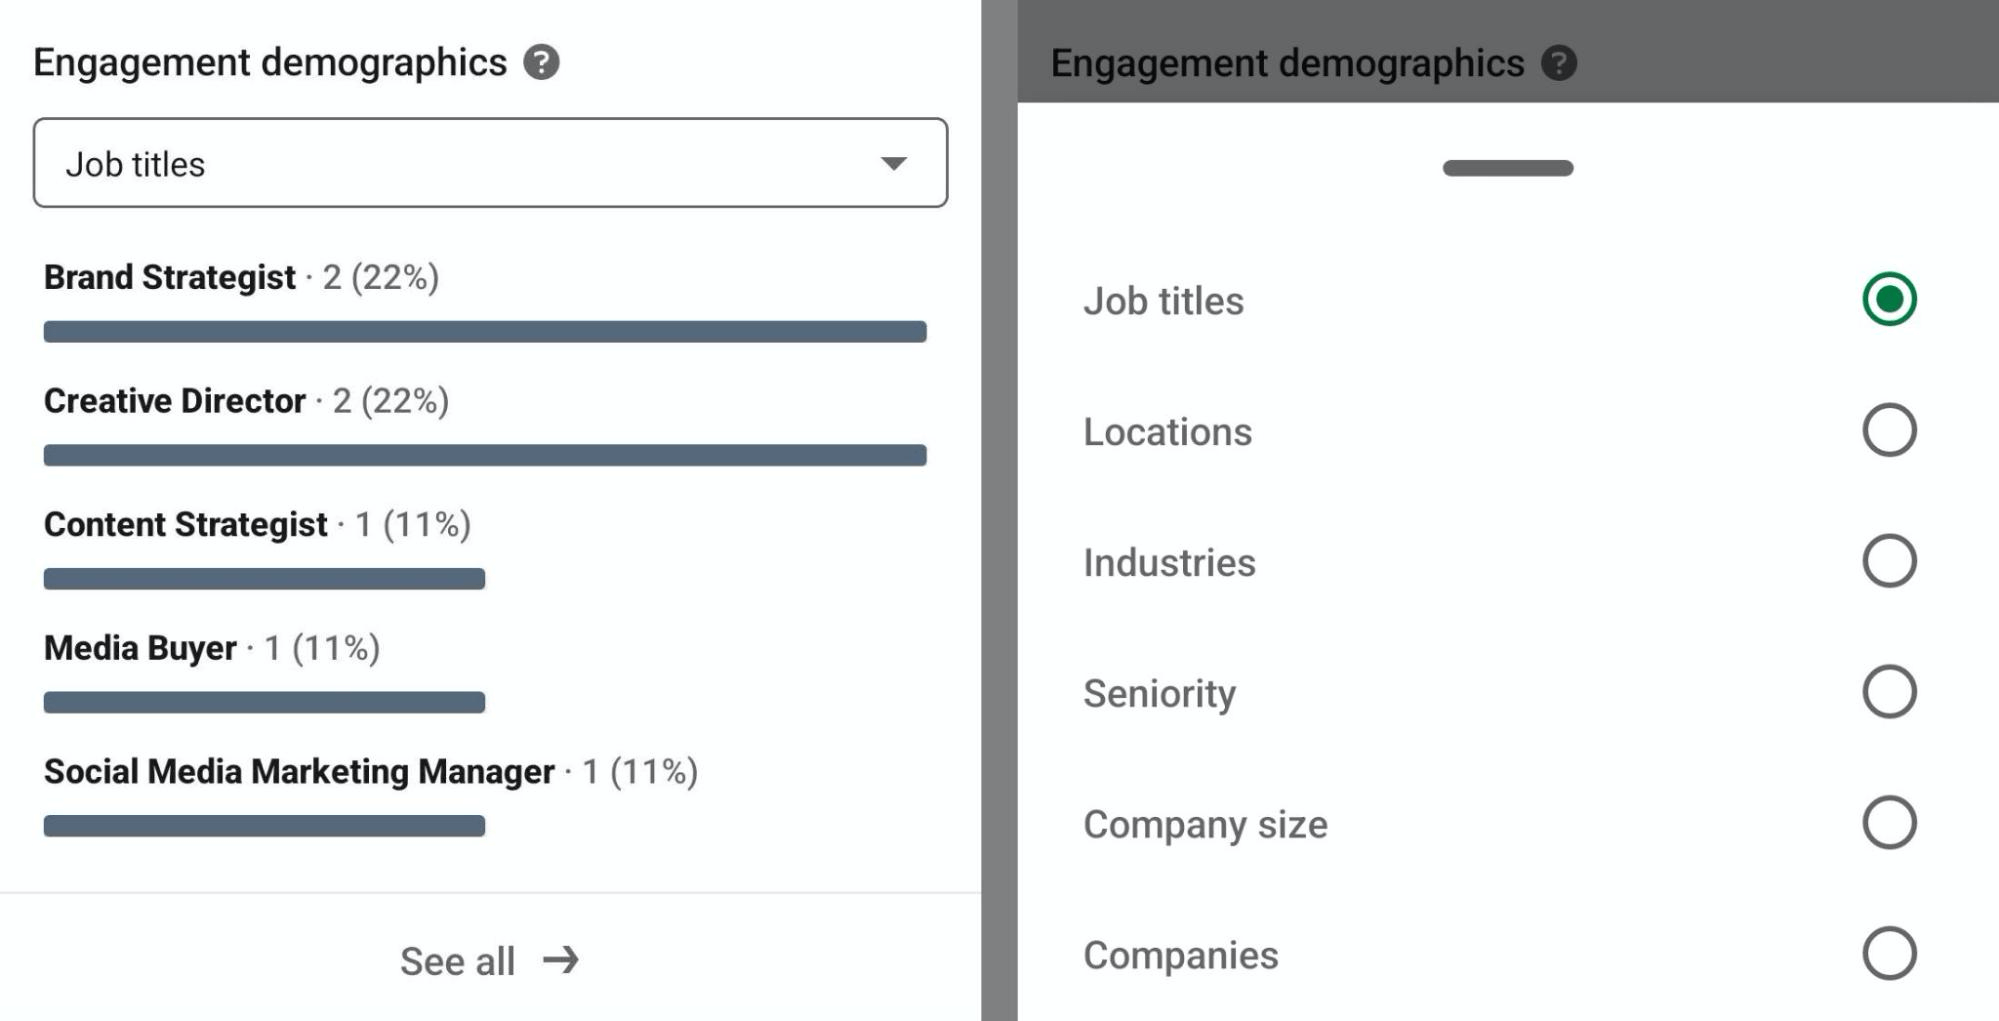 image of engagement demographics in LinkedIn creator analytics